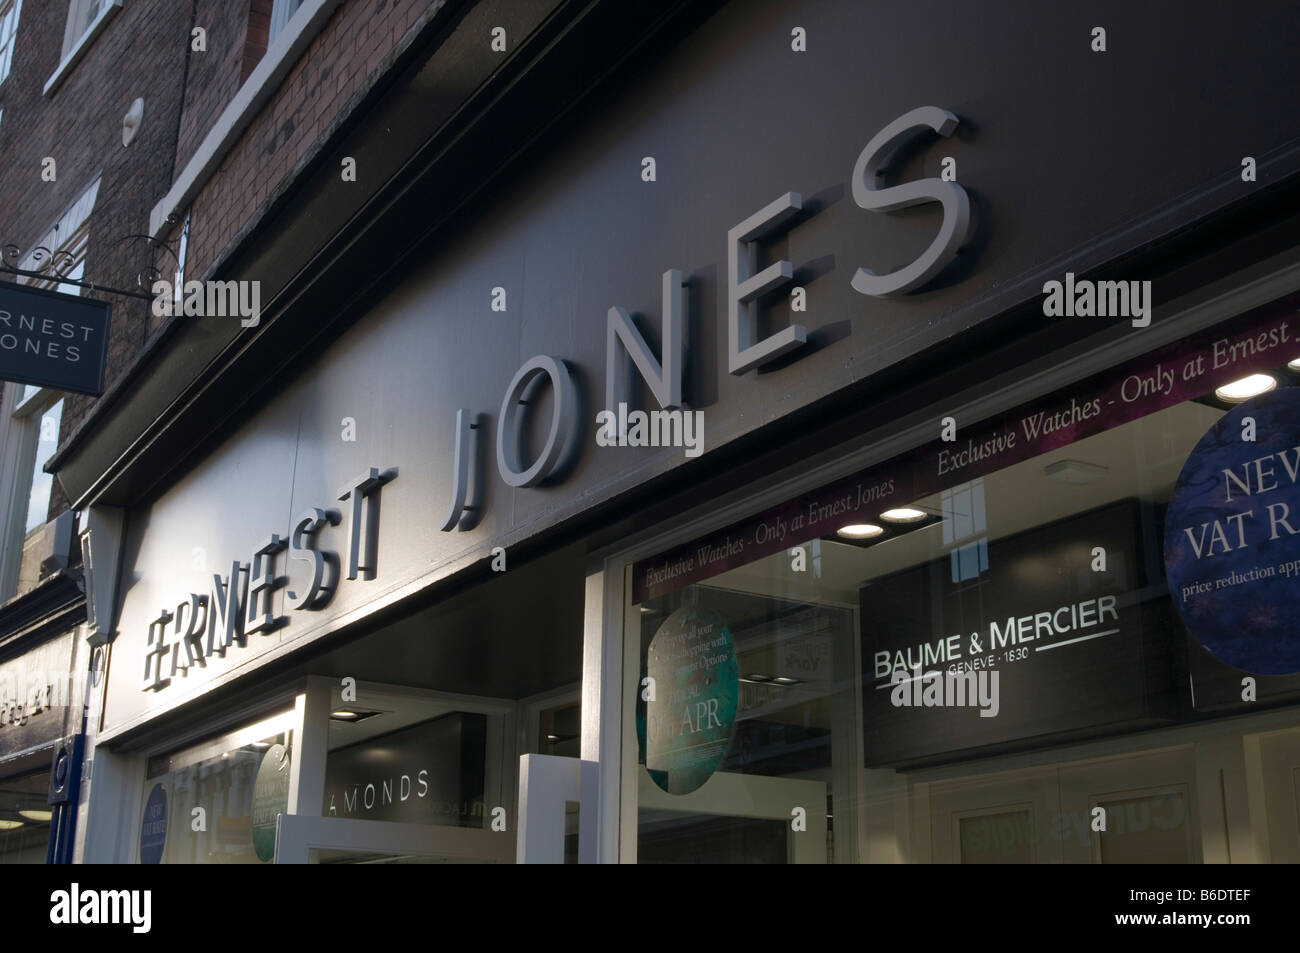 ernest jones jewelers jewellery diamond and watch specialist high street retailer retail shop uk Stock Photo